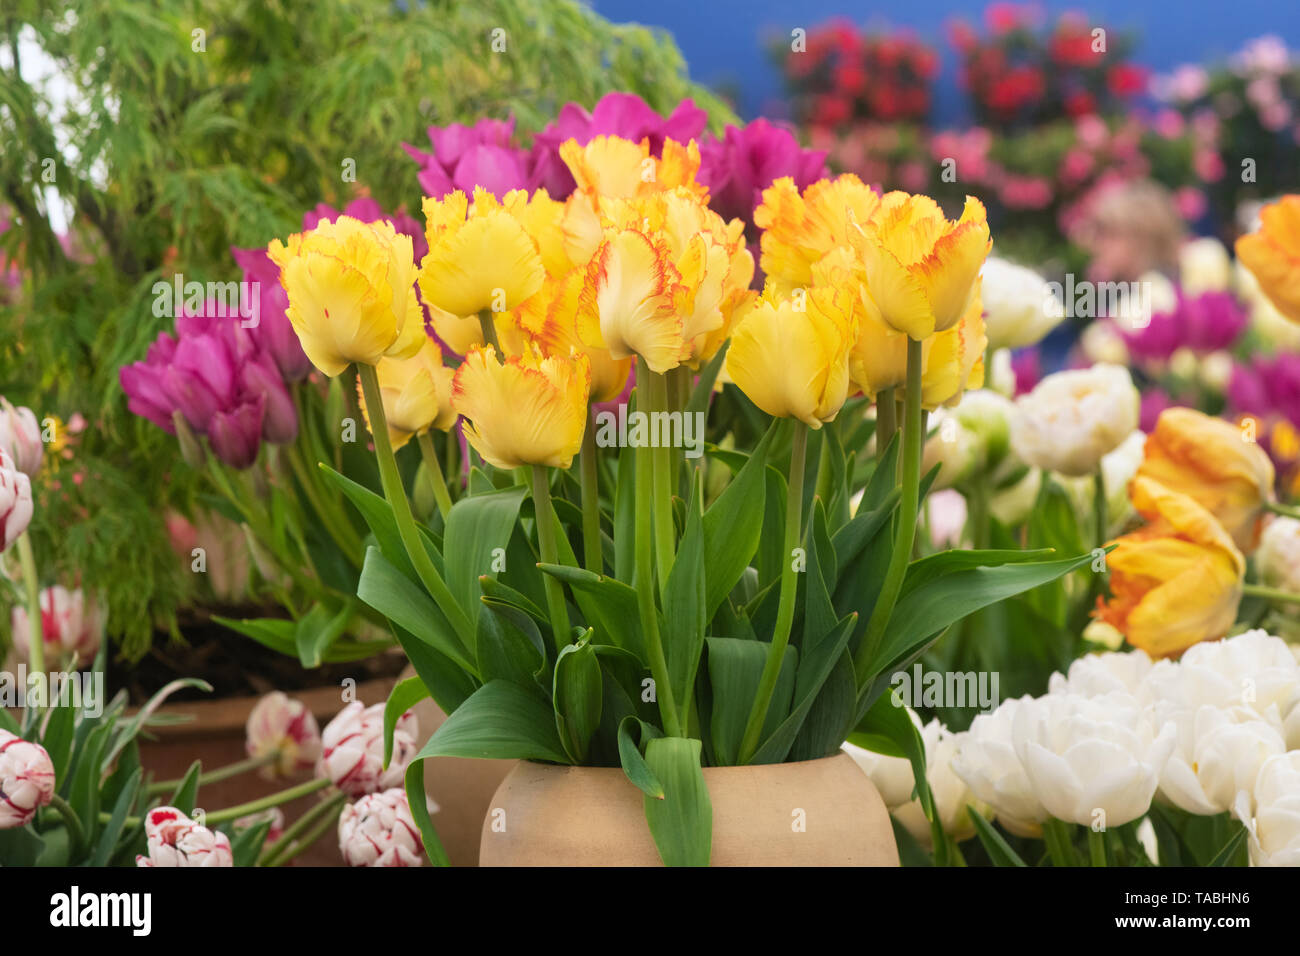 Tulipa. Tulip ‘Caribbean parrot' flowers. Parrot Tulip flowers in a vase Stock Photo